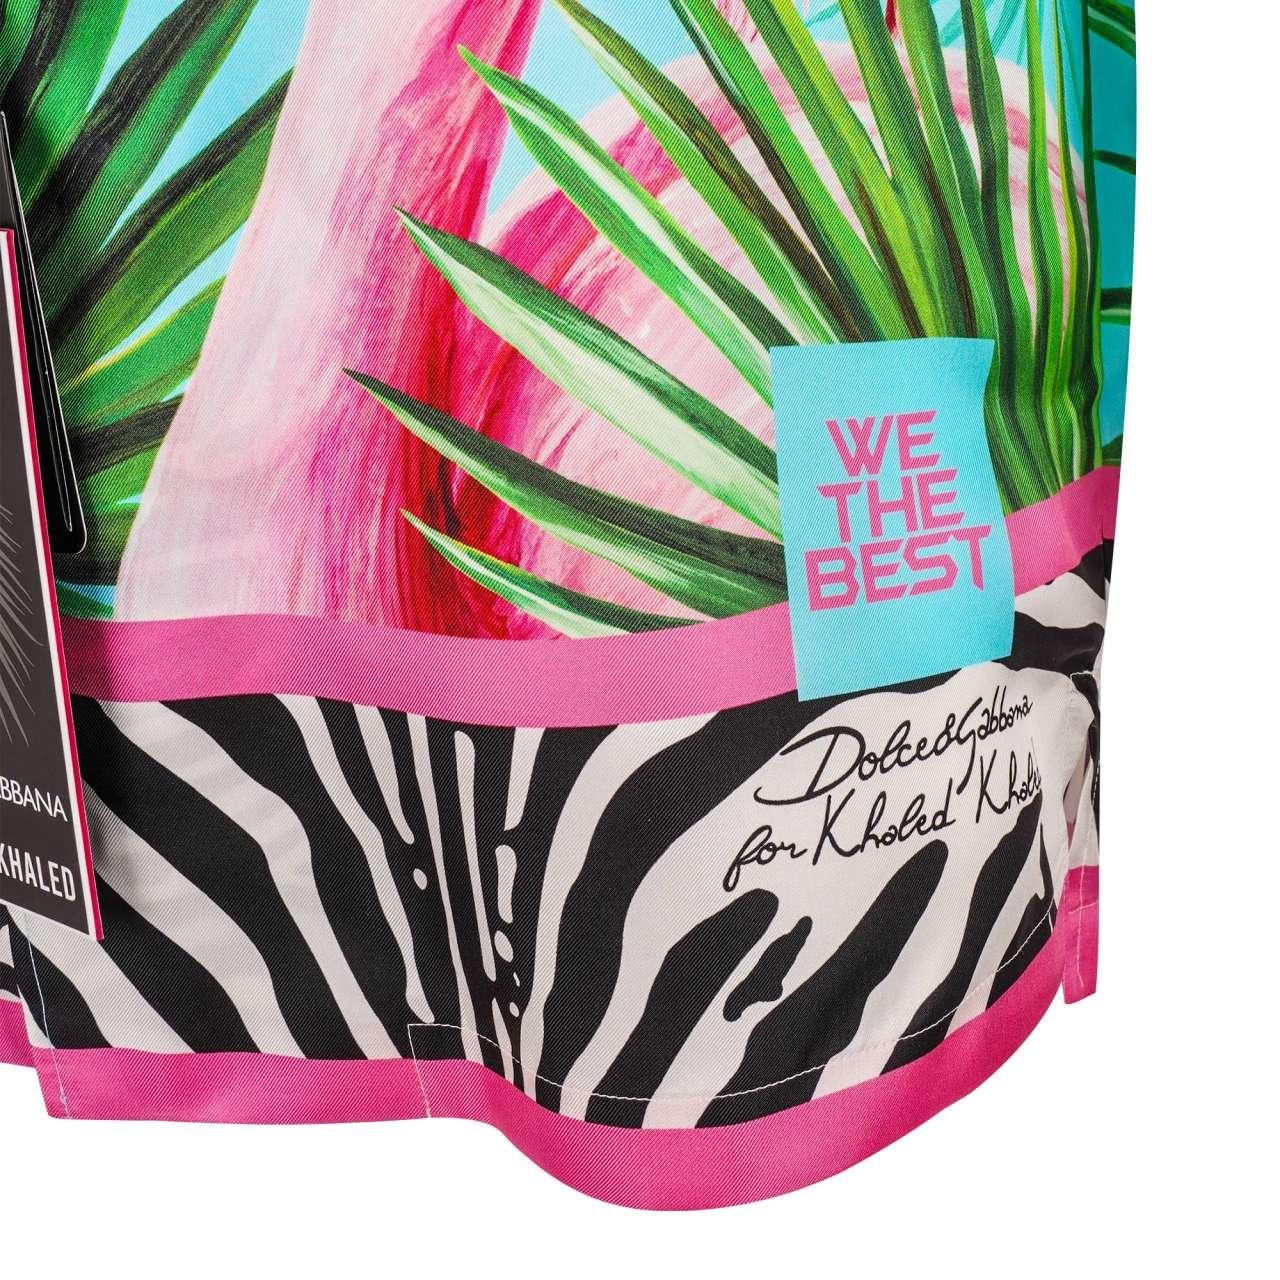 Women's D&G - DJ Khaled Silk Flamingo Zebra Shirt Blouse with Sunglasses and CD 42 For Sale